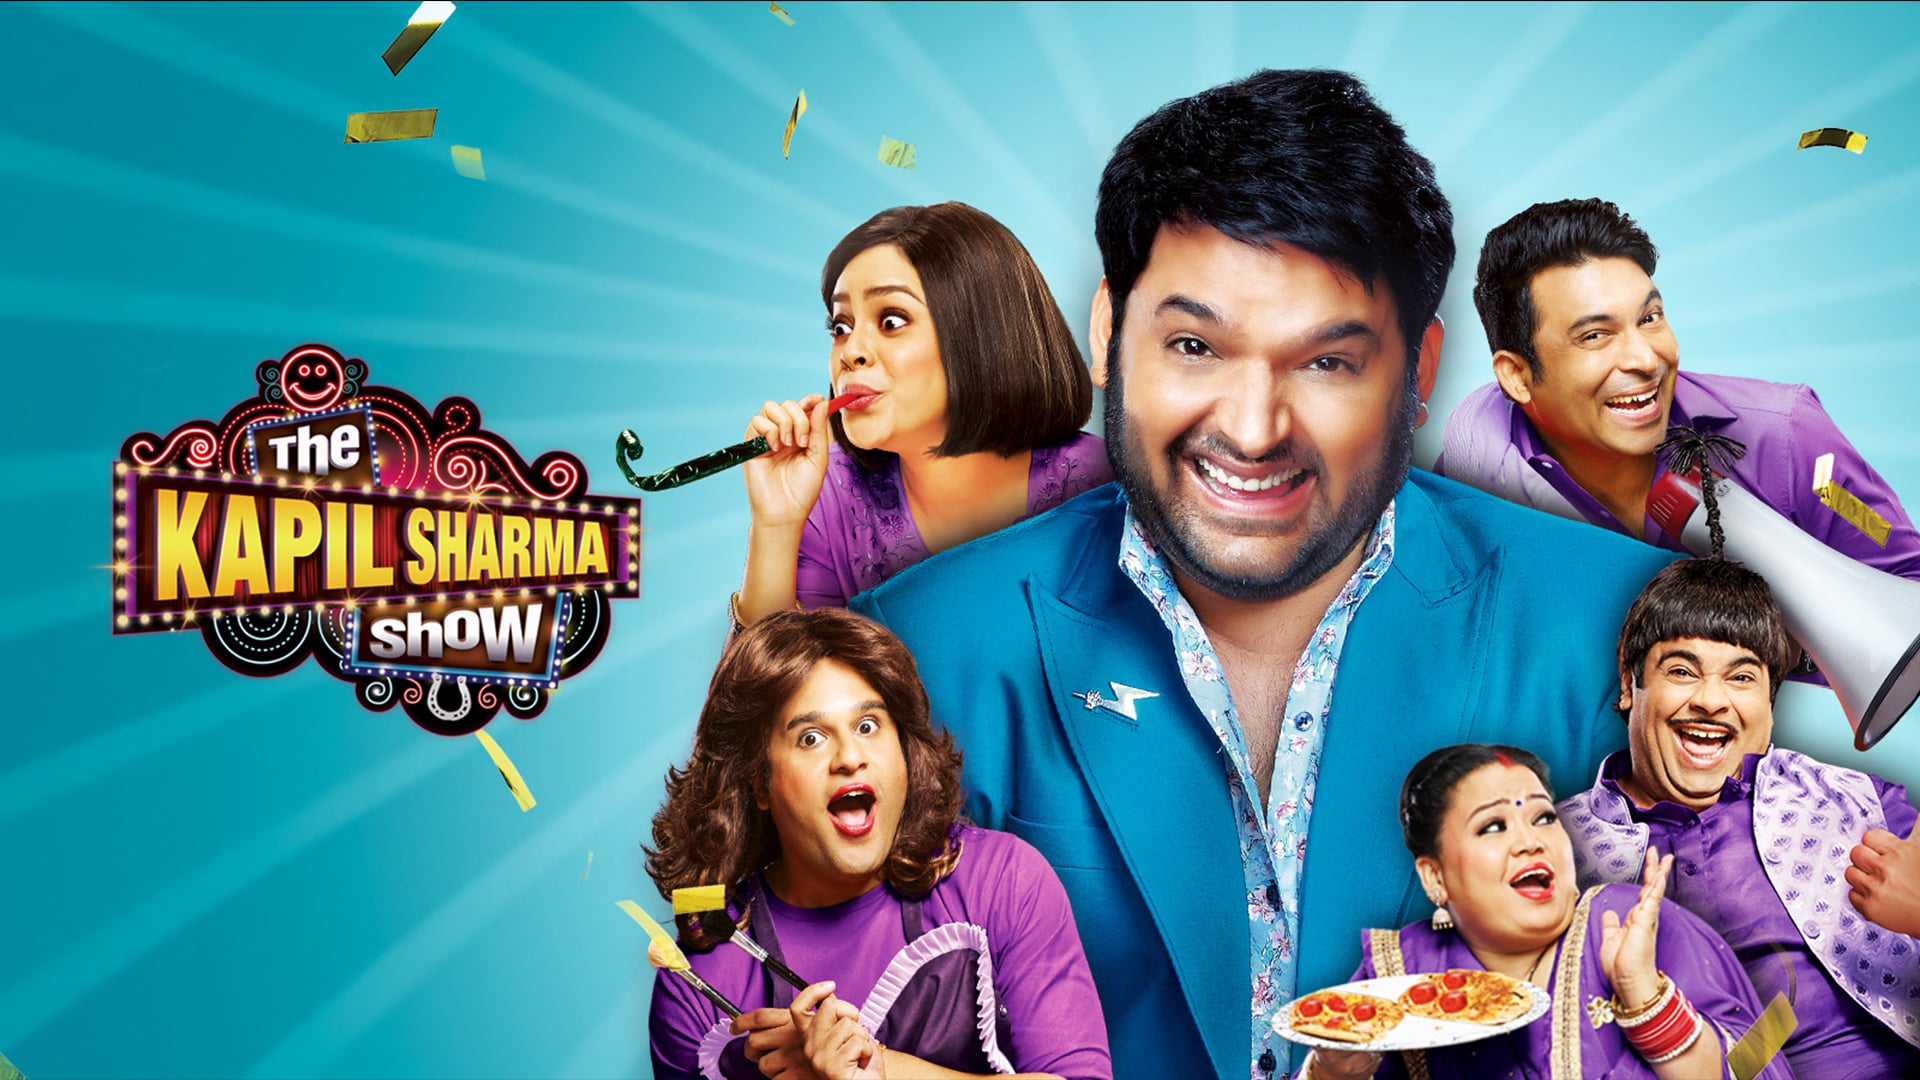 The Kapil Sharma Show - Season 2 Episode 111 : Laughter Cruise Jaaneman